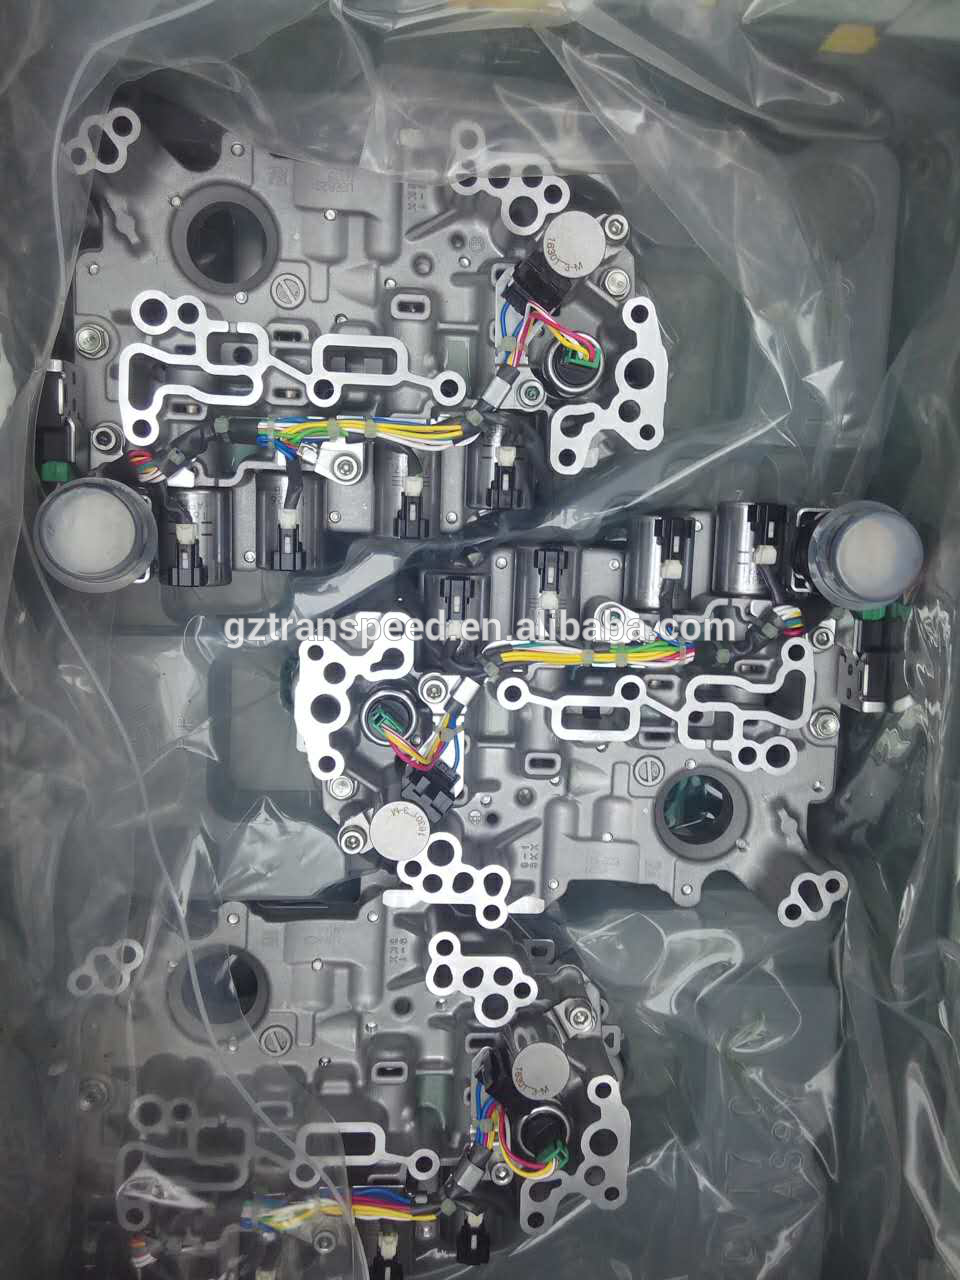 re0f11a jf015e valve body.png